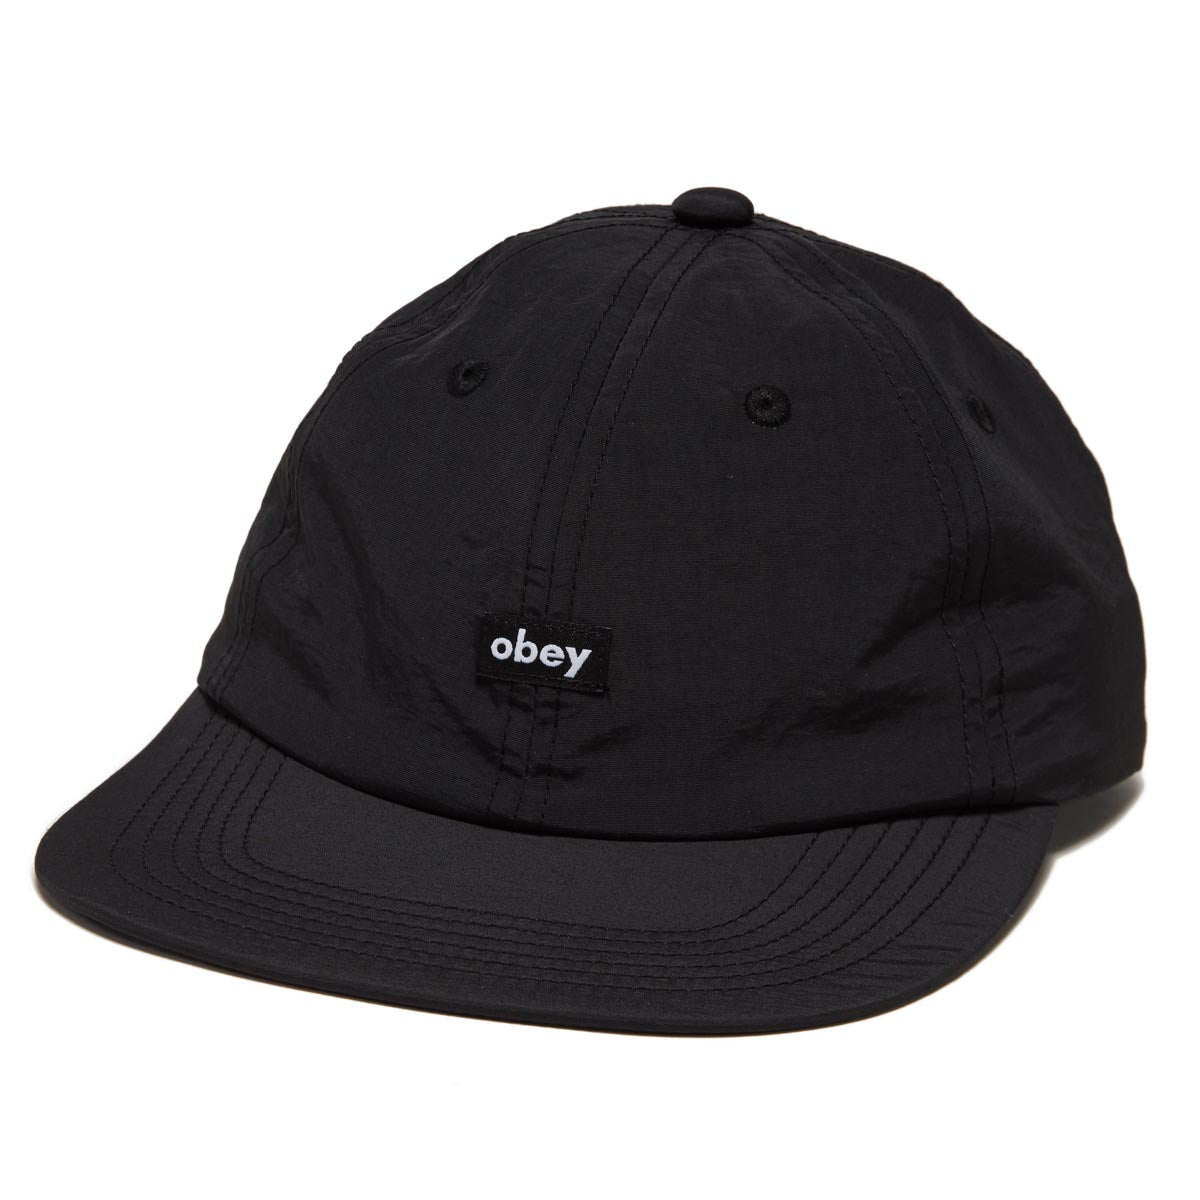 Obey Lowercase Nylon 6 Panel Strapback Hat - Black image 1